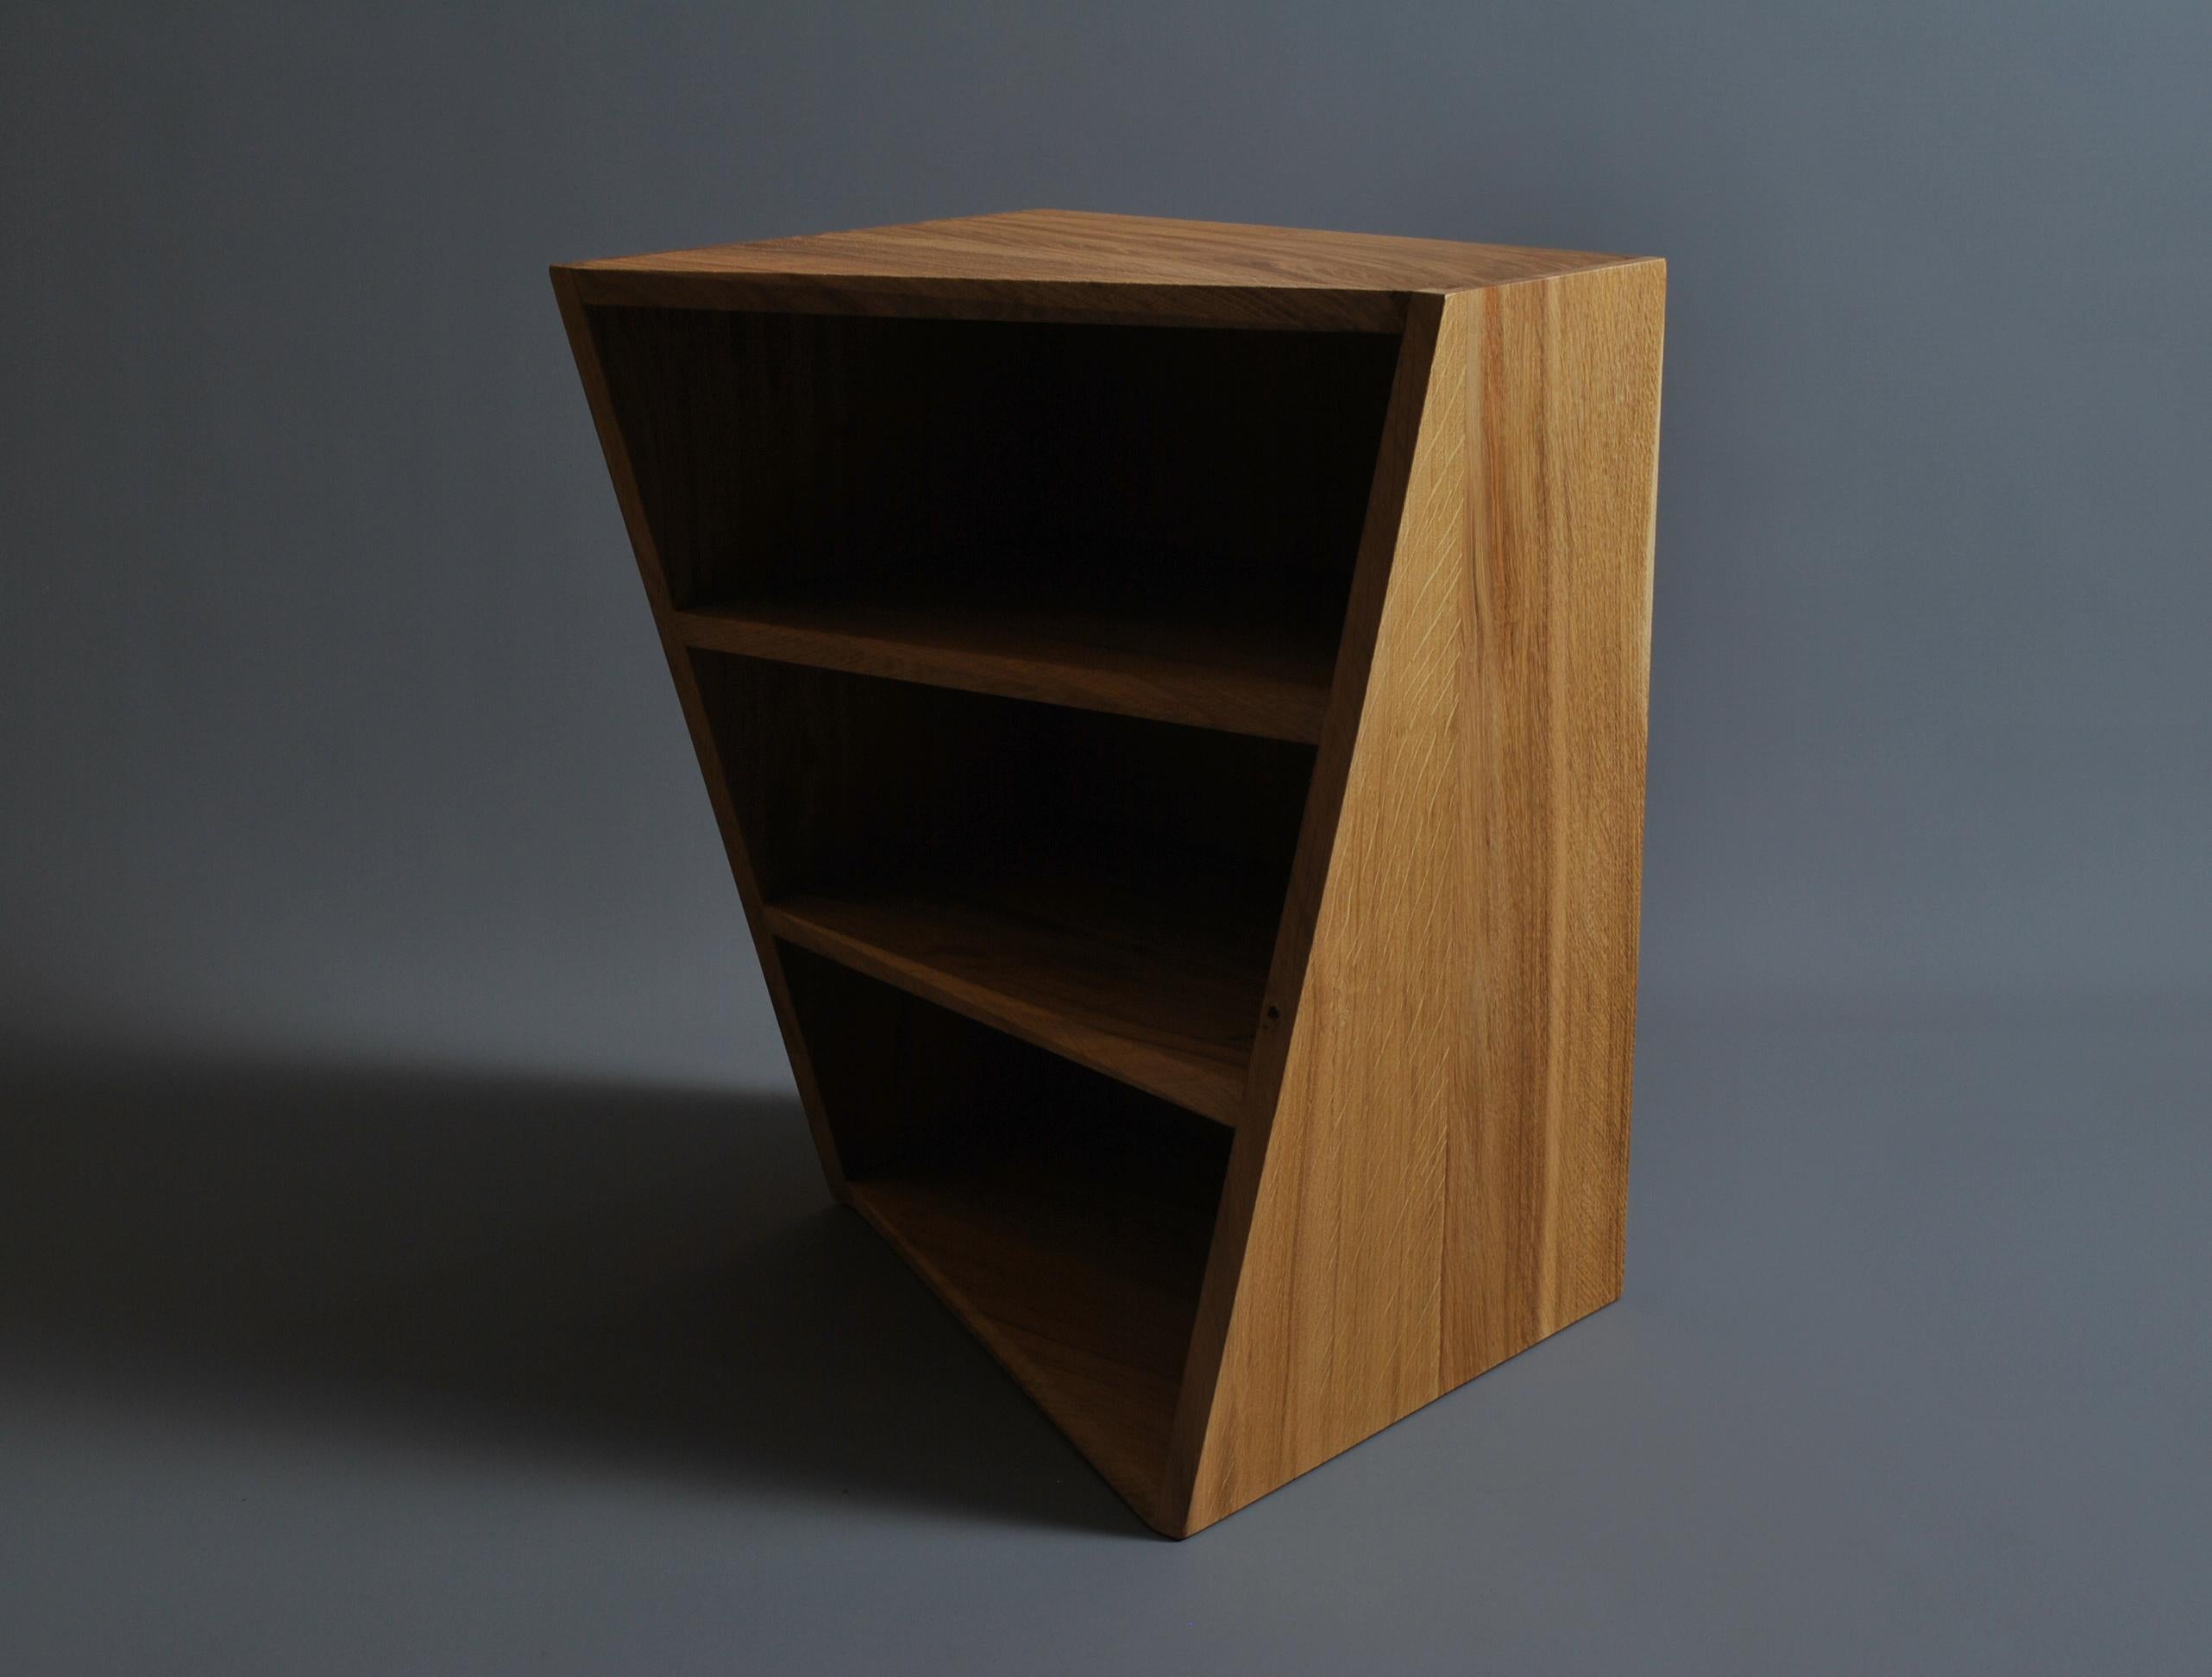 English Handcrafted Postmodern Shelf Unit For Sale